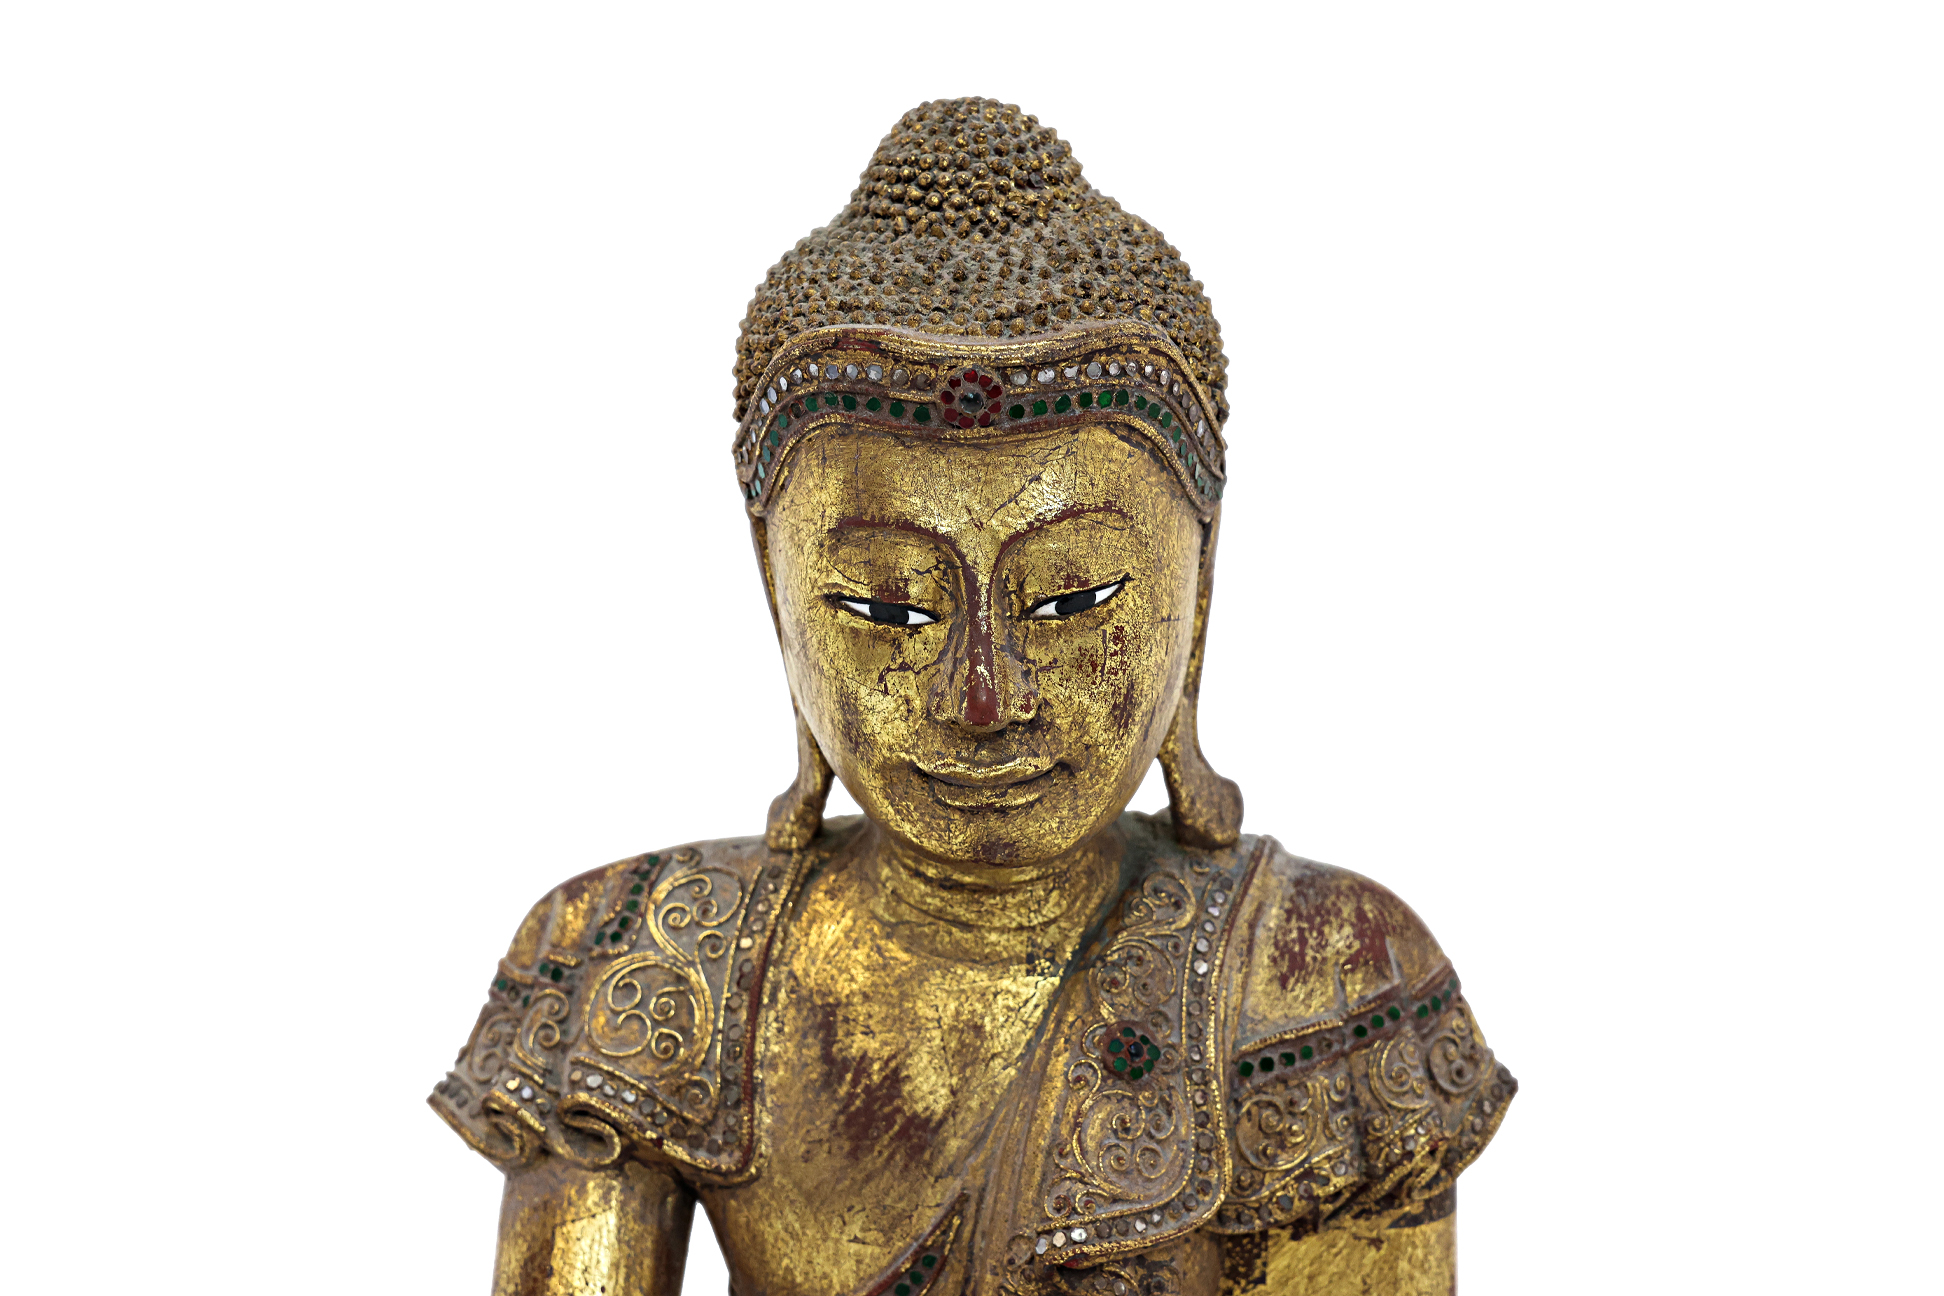 A THAI STATUE OF BUDDHA SITTING - Image 2 of 3